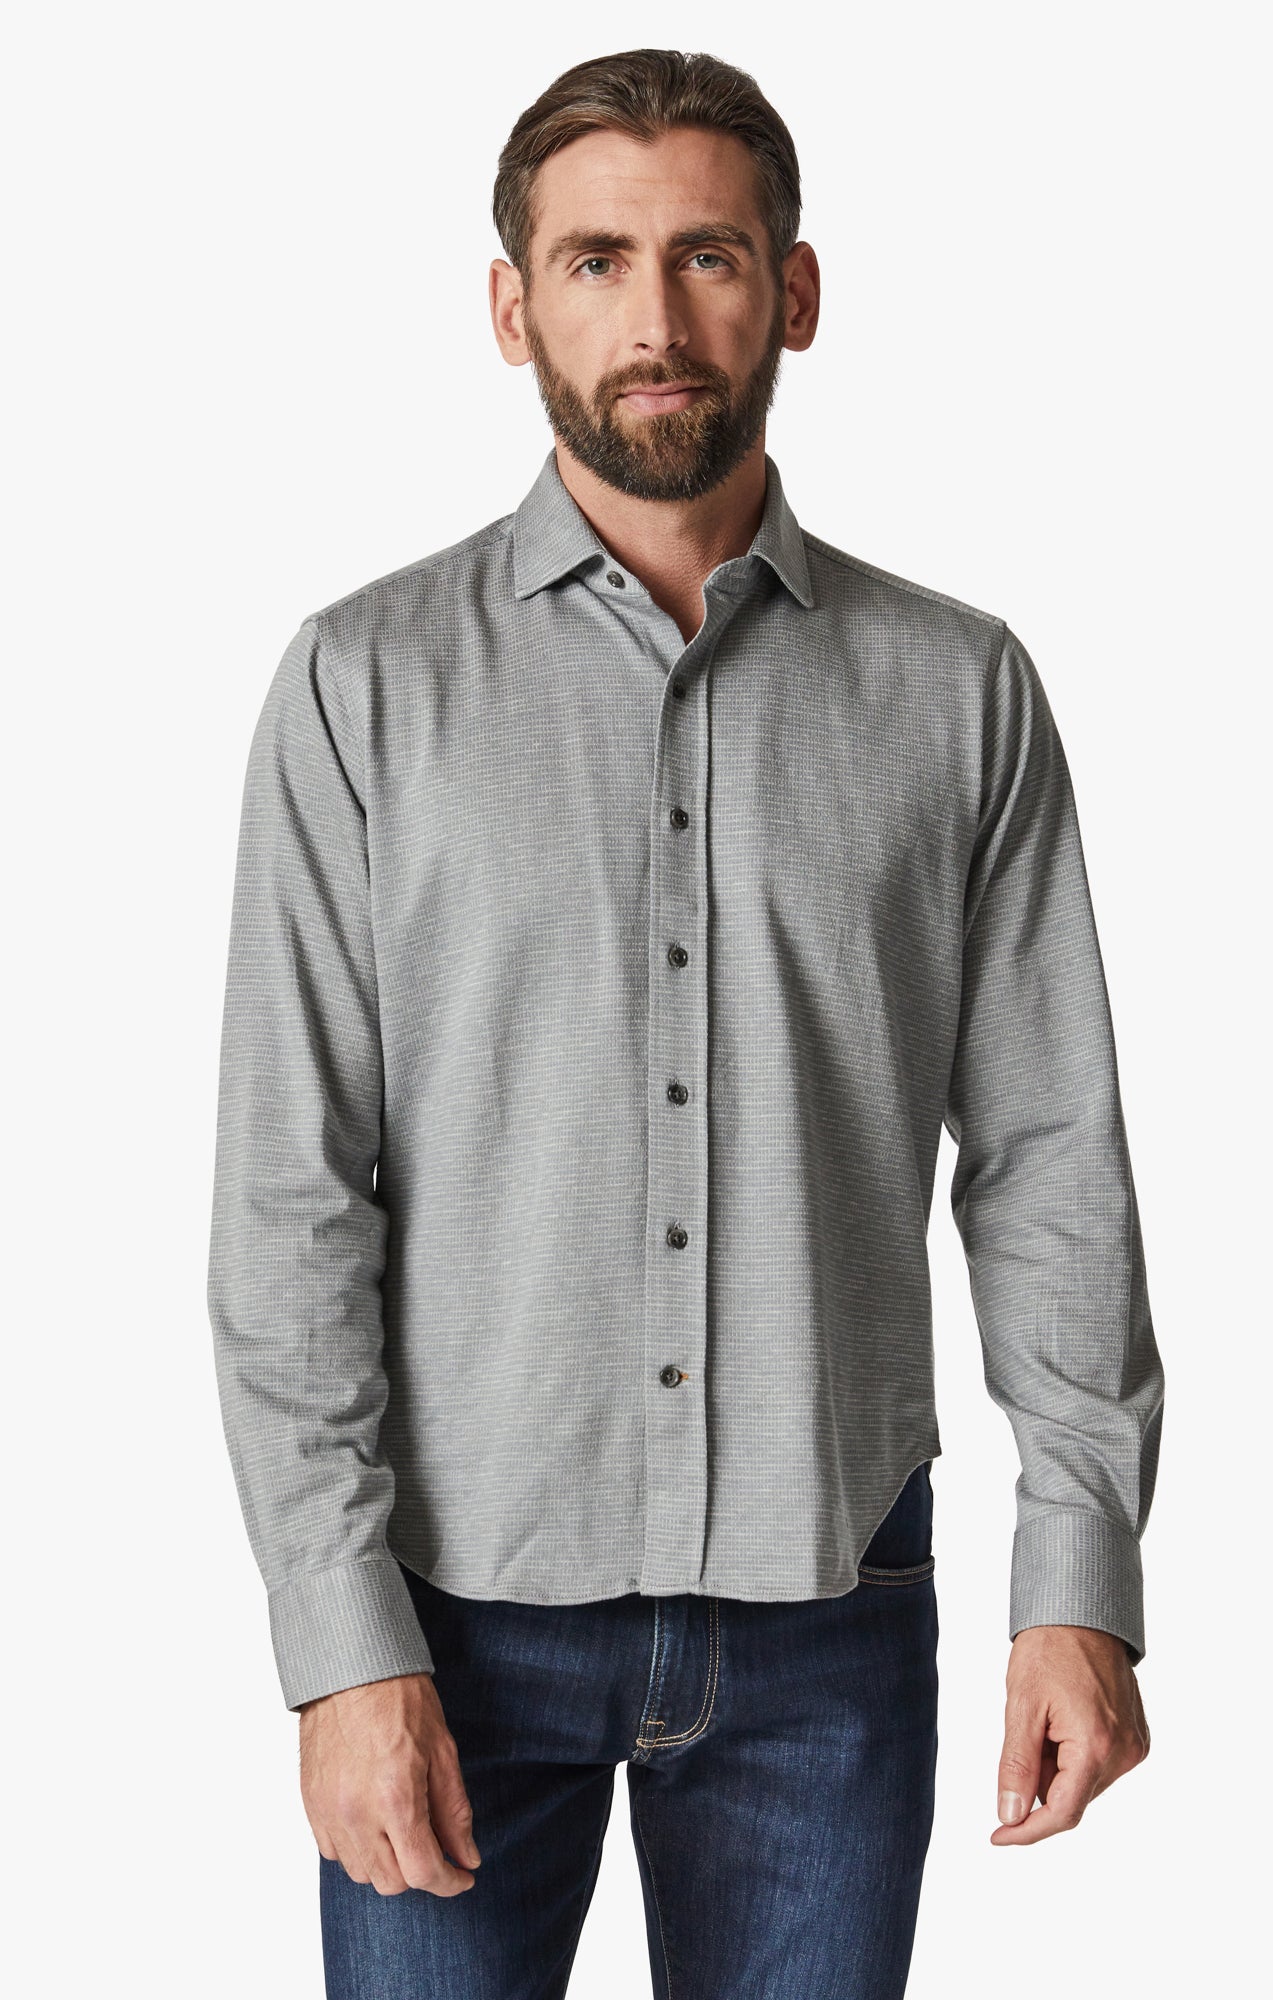 Structured Shirt In Lt Grey